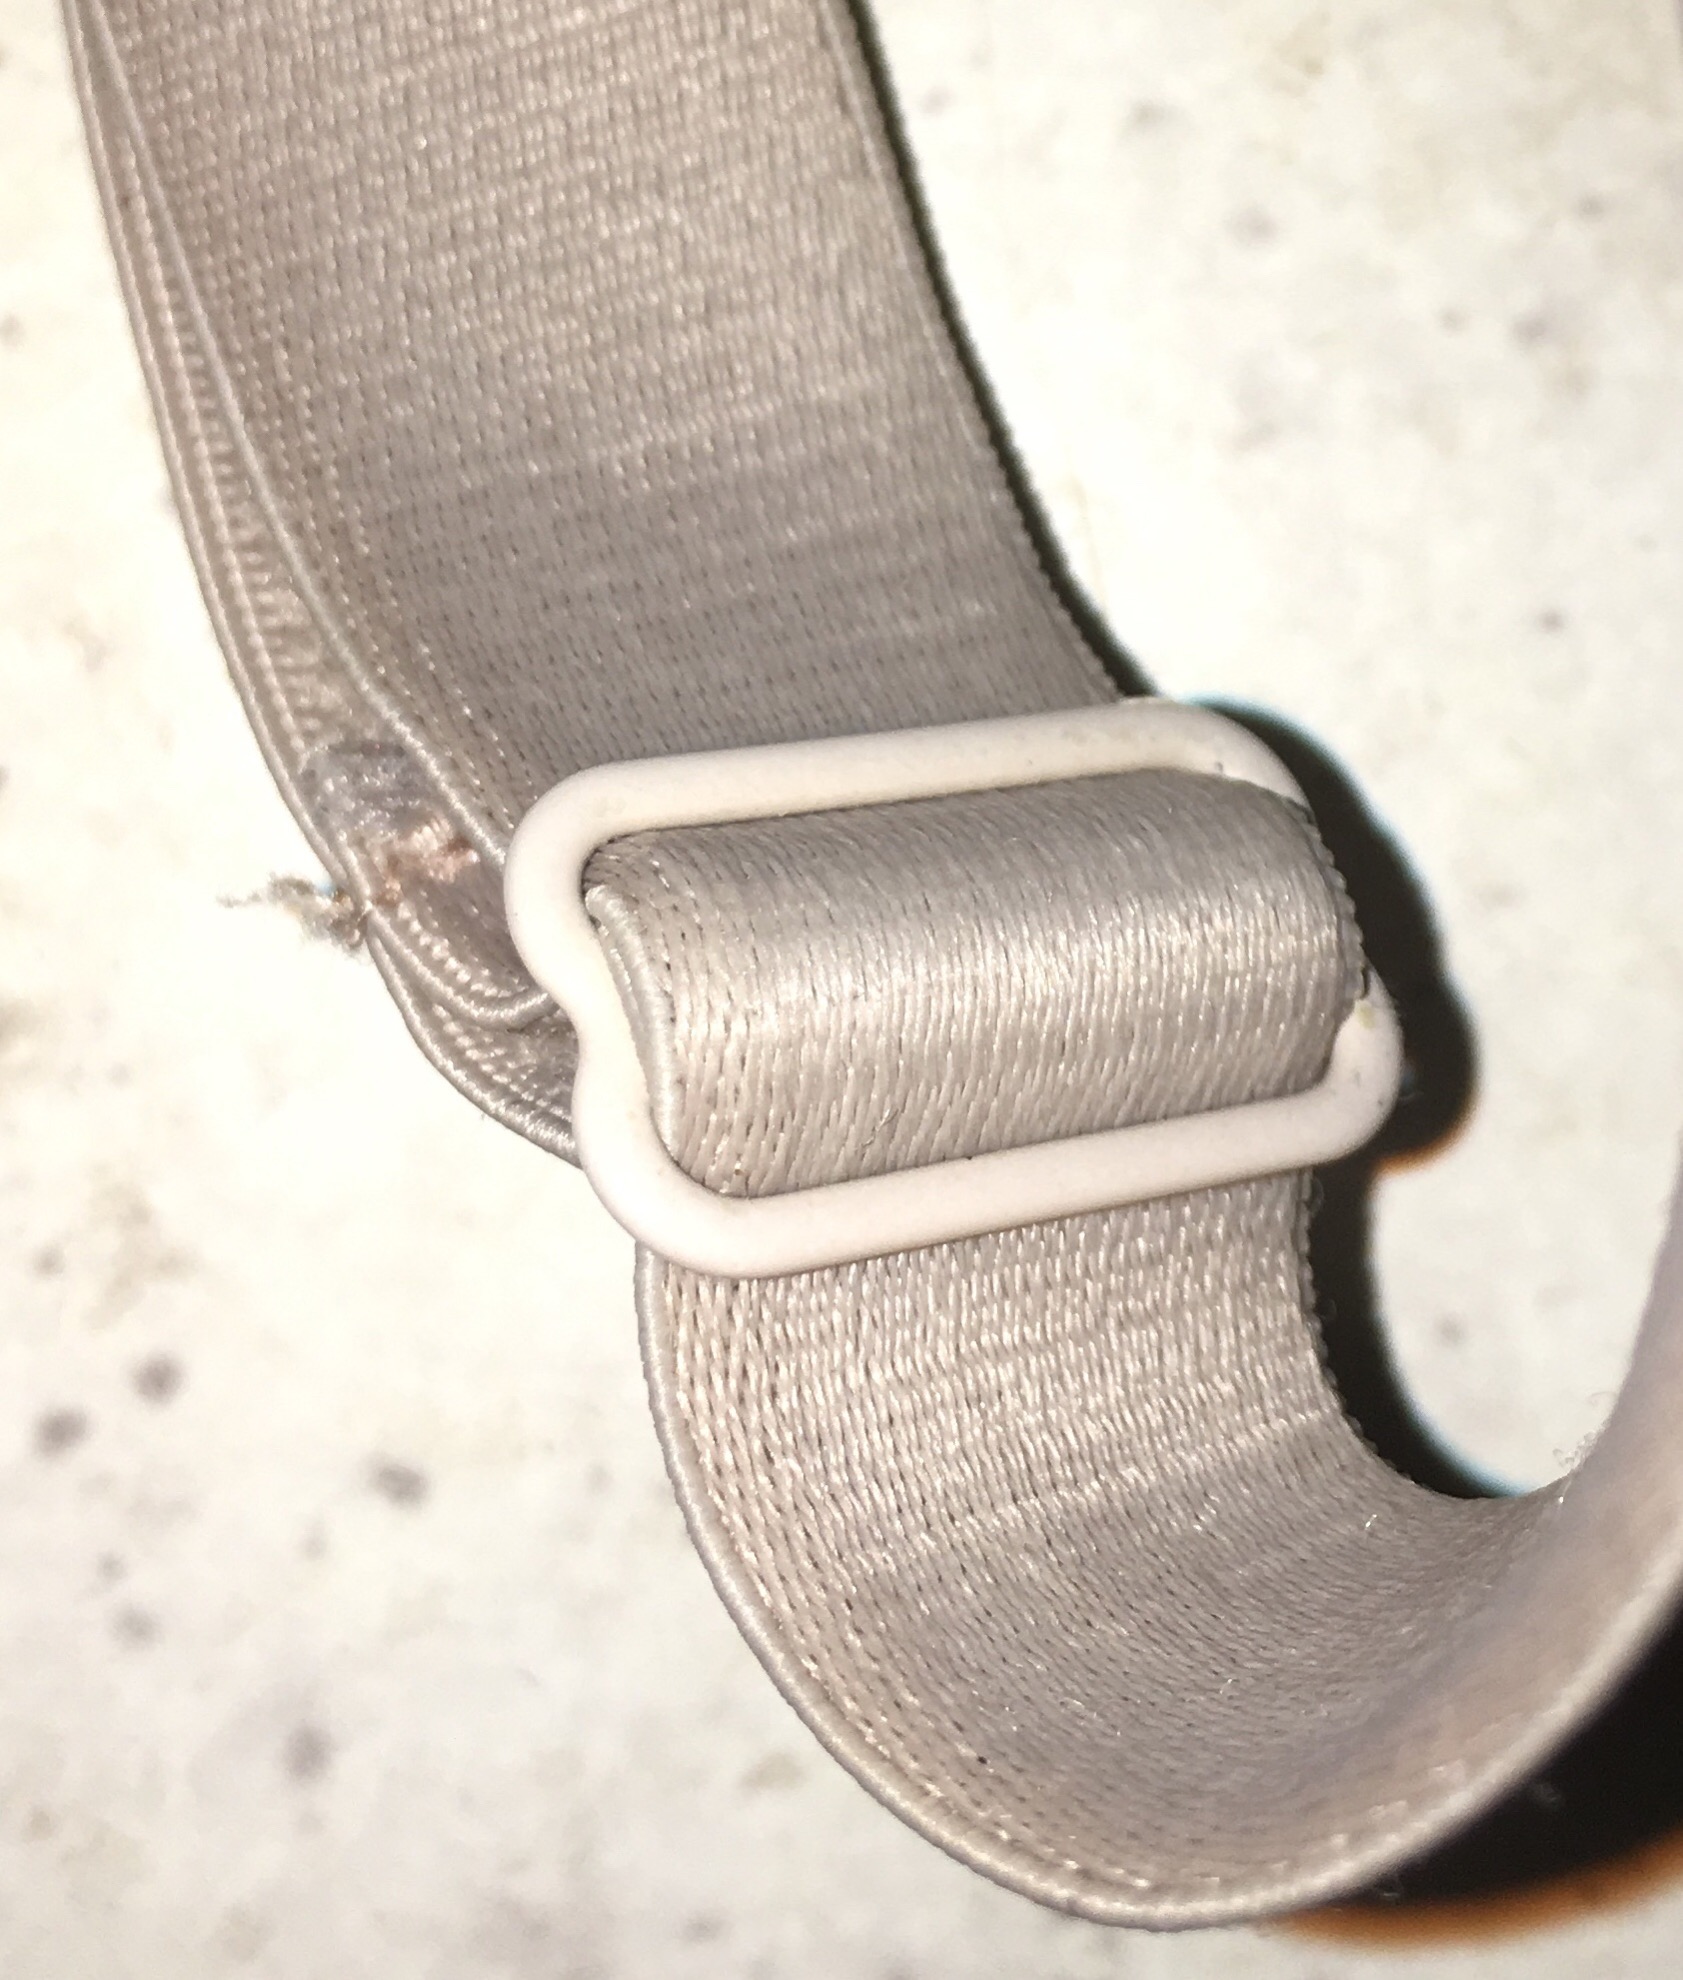 File:Small bra strap with metal tri-glide slide.jpg - Wikimedia Commons